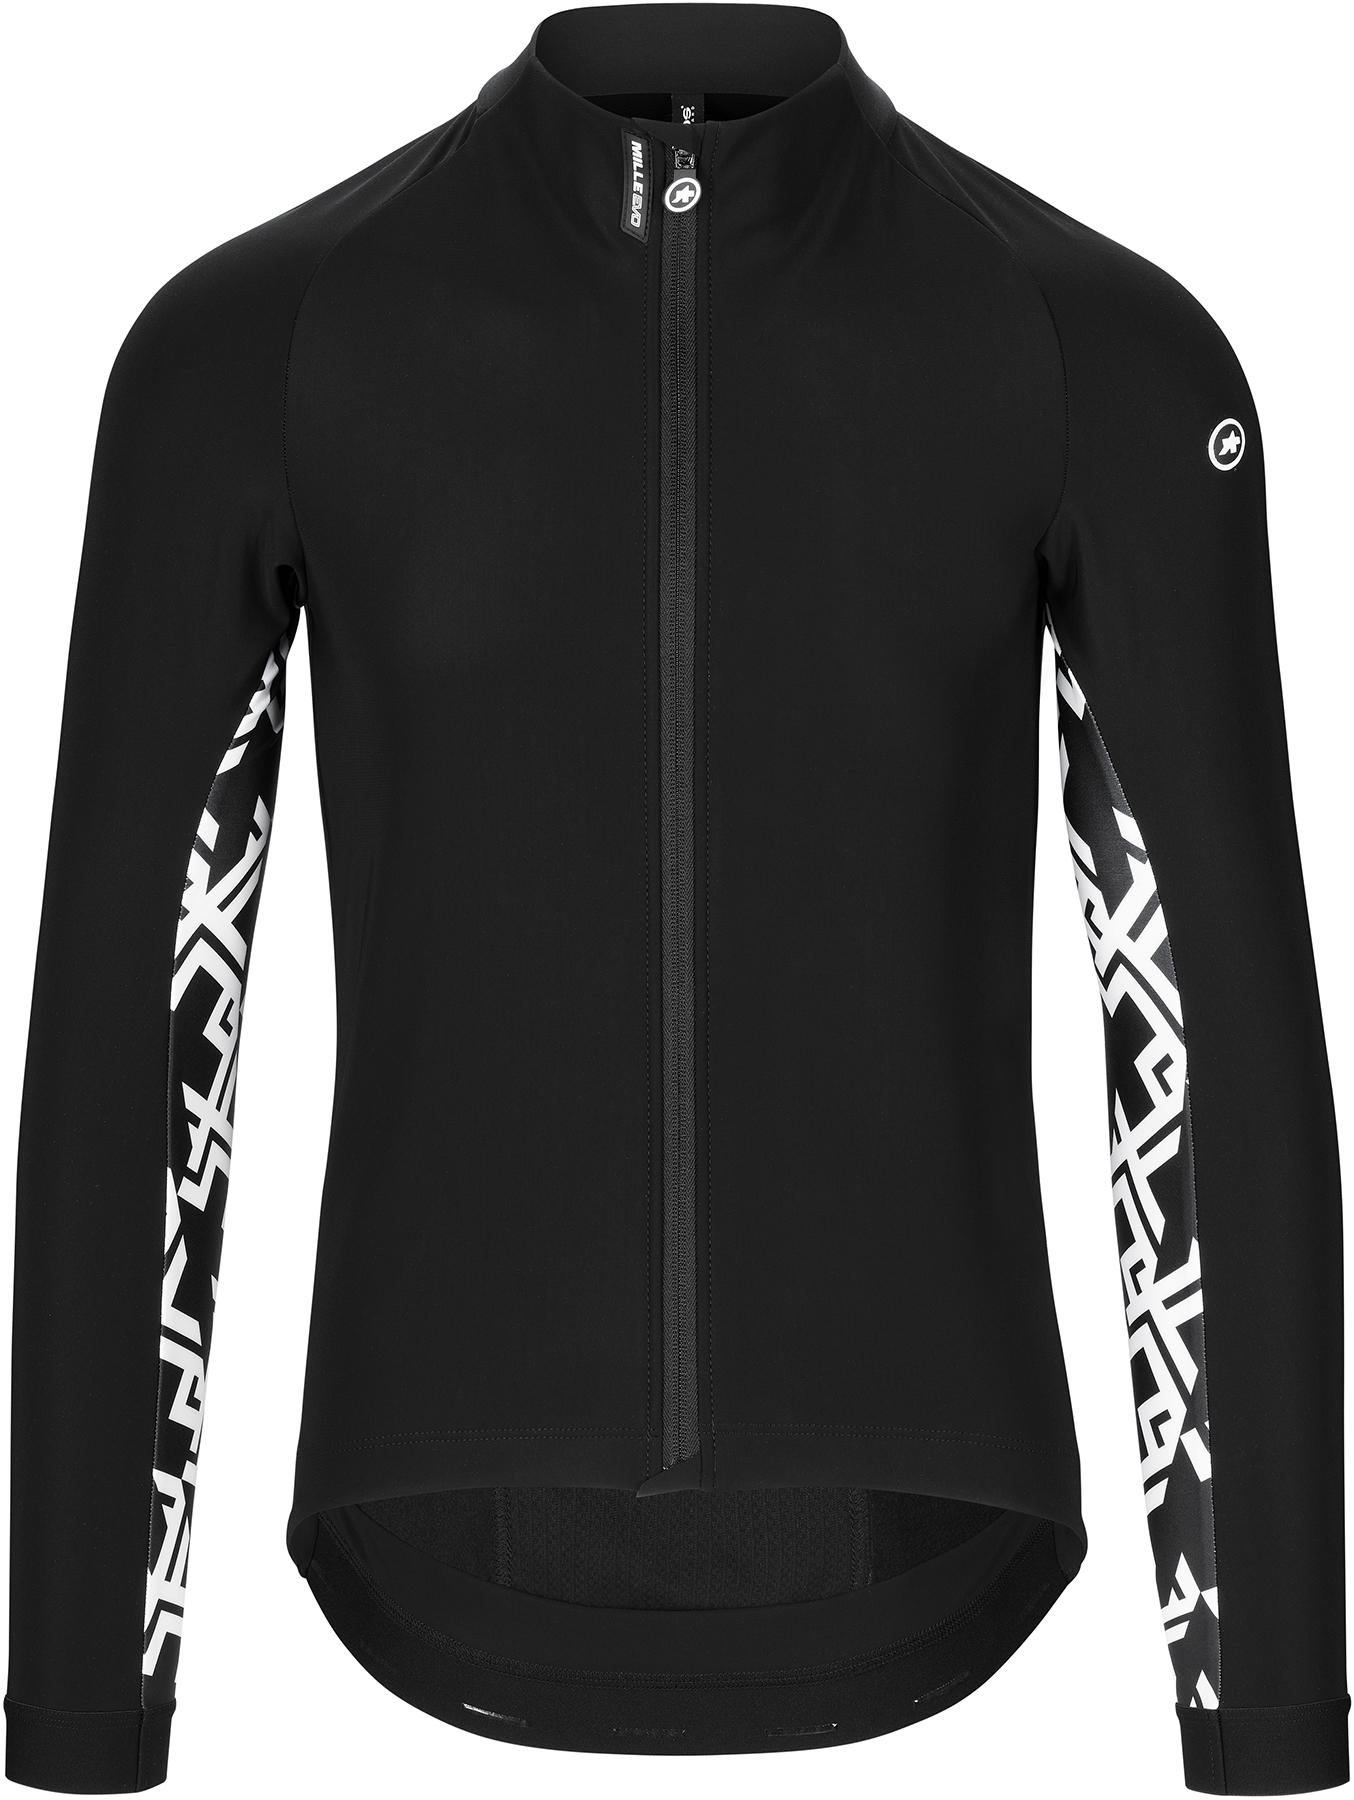 Assos Mille Gt Winter Jacket Evo - Black Series